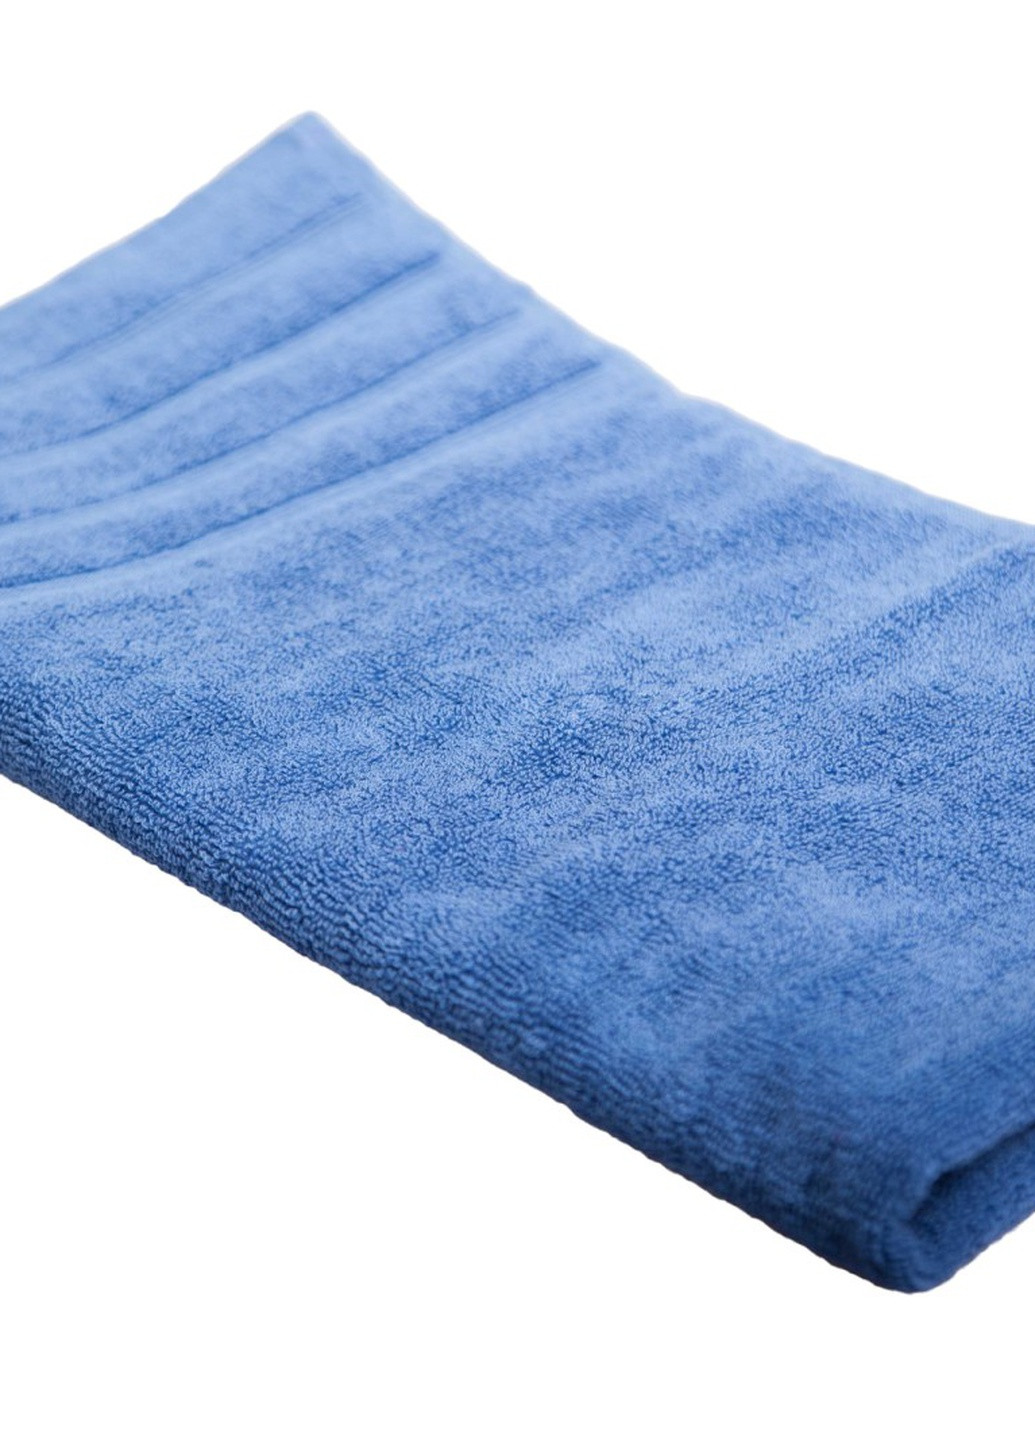 Bulgaria-Tex полотенце махровое new wave, bulgaria tex, синее, размер 70x140 см, плотность 420 гр/м2 синий производство - Болгария